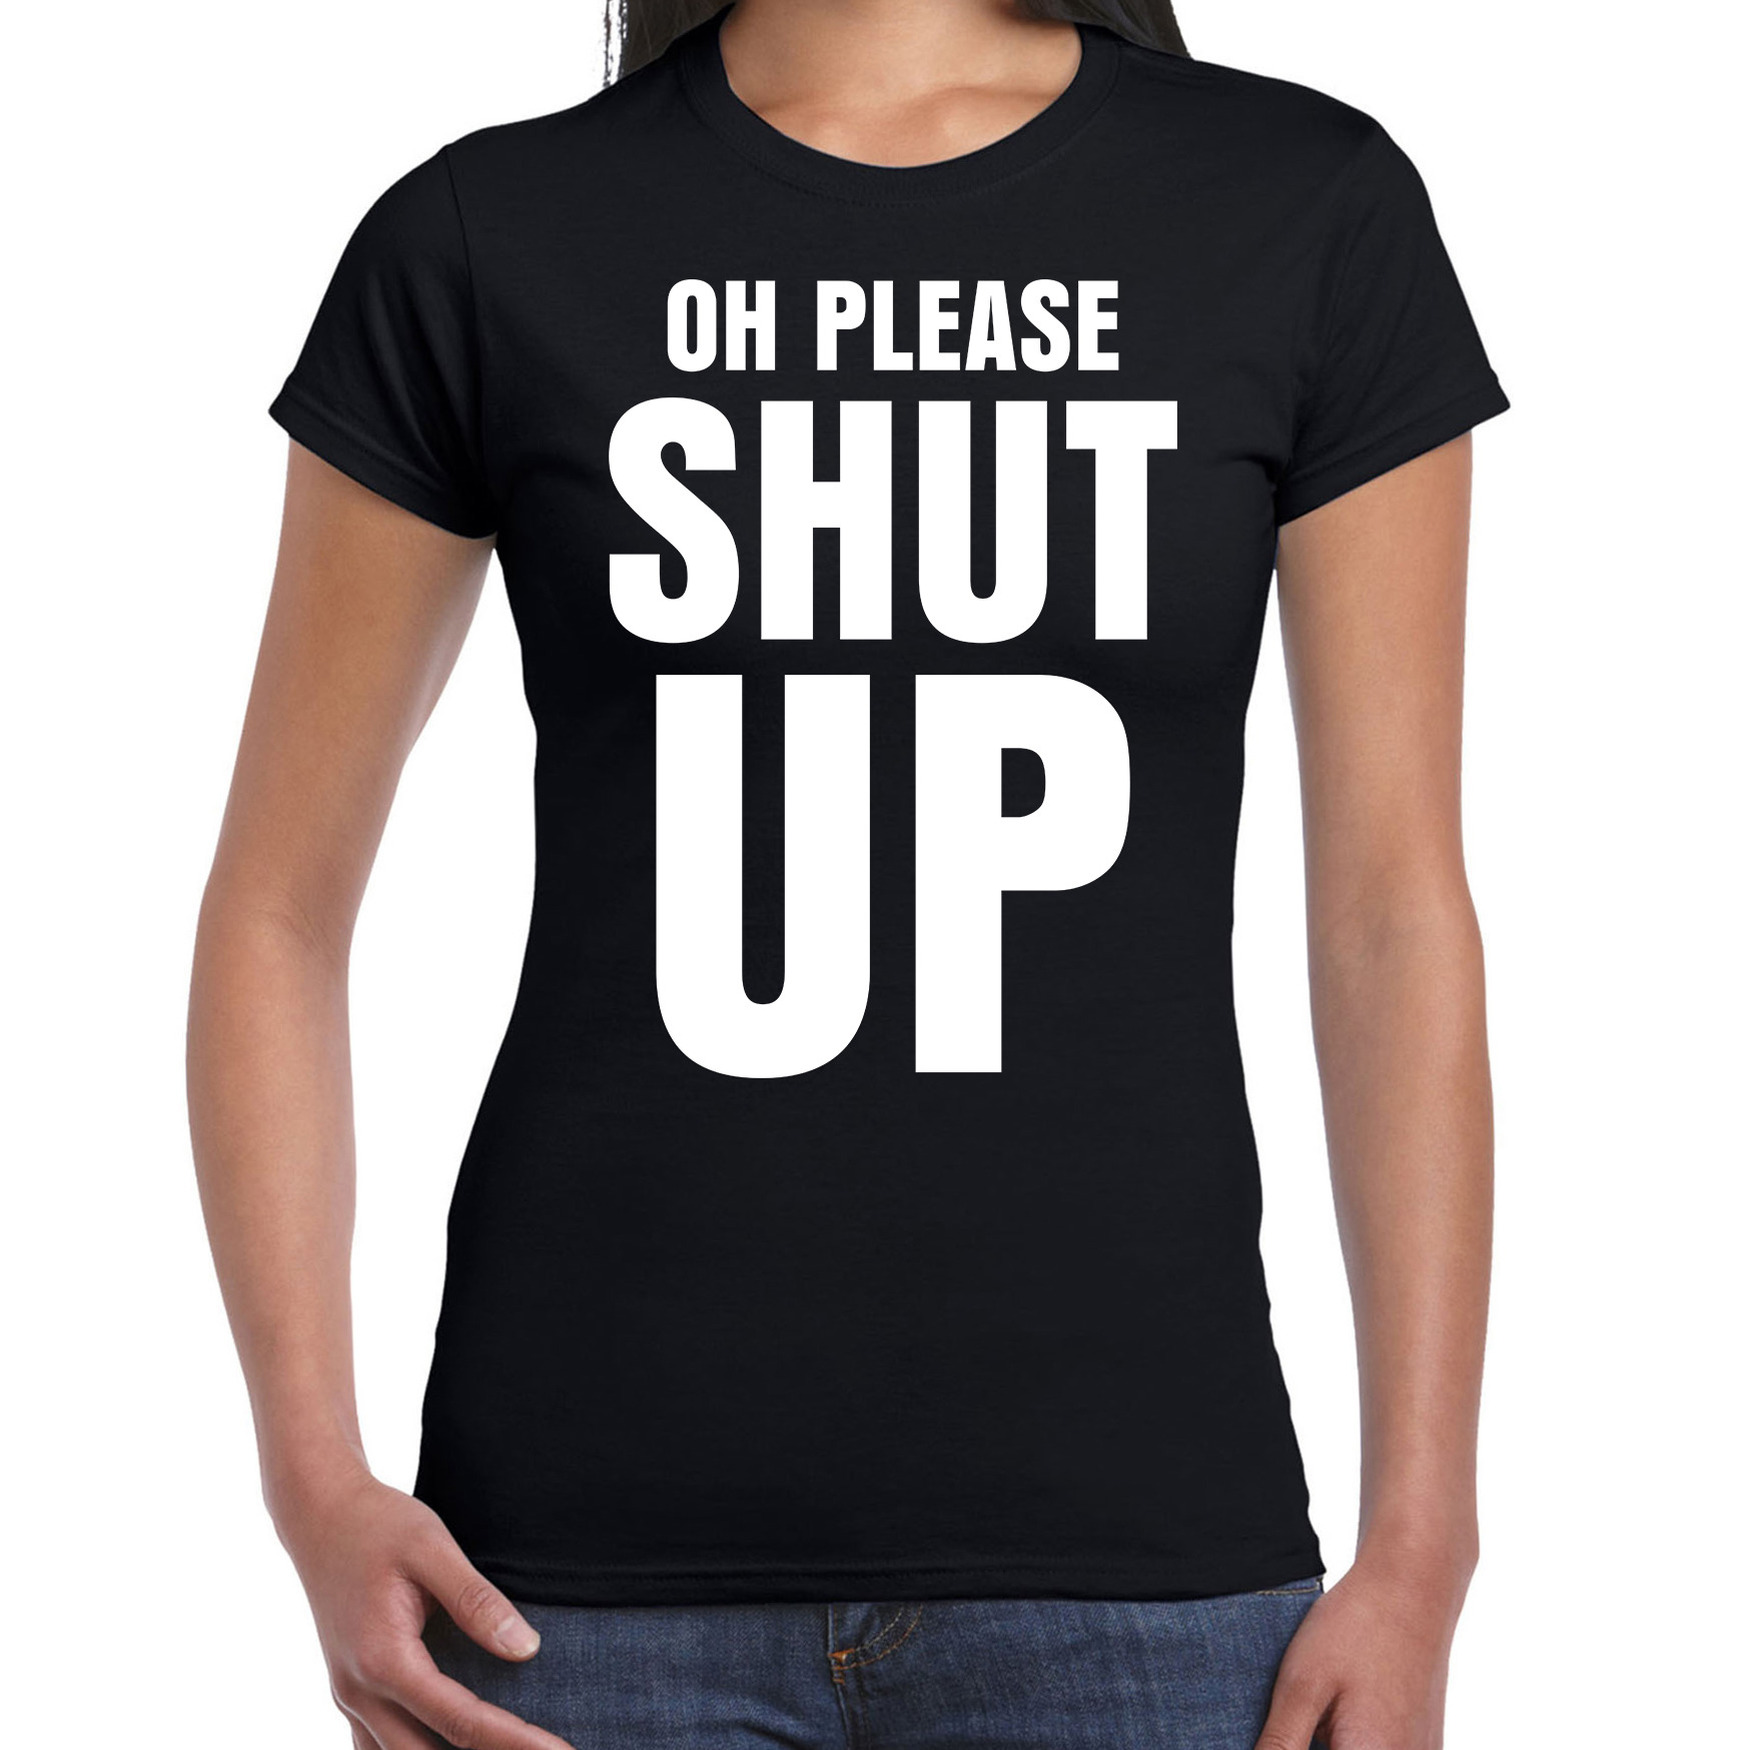 Oh please SHUT UP t shirt zwart dames fun tekst shirt foute shirts voor vrouwen